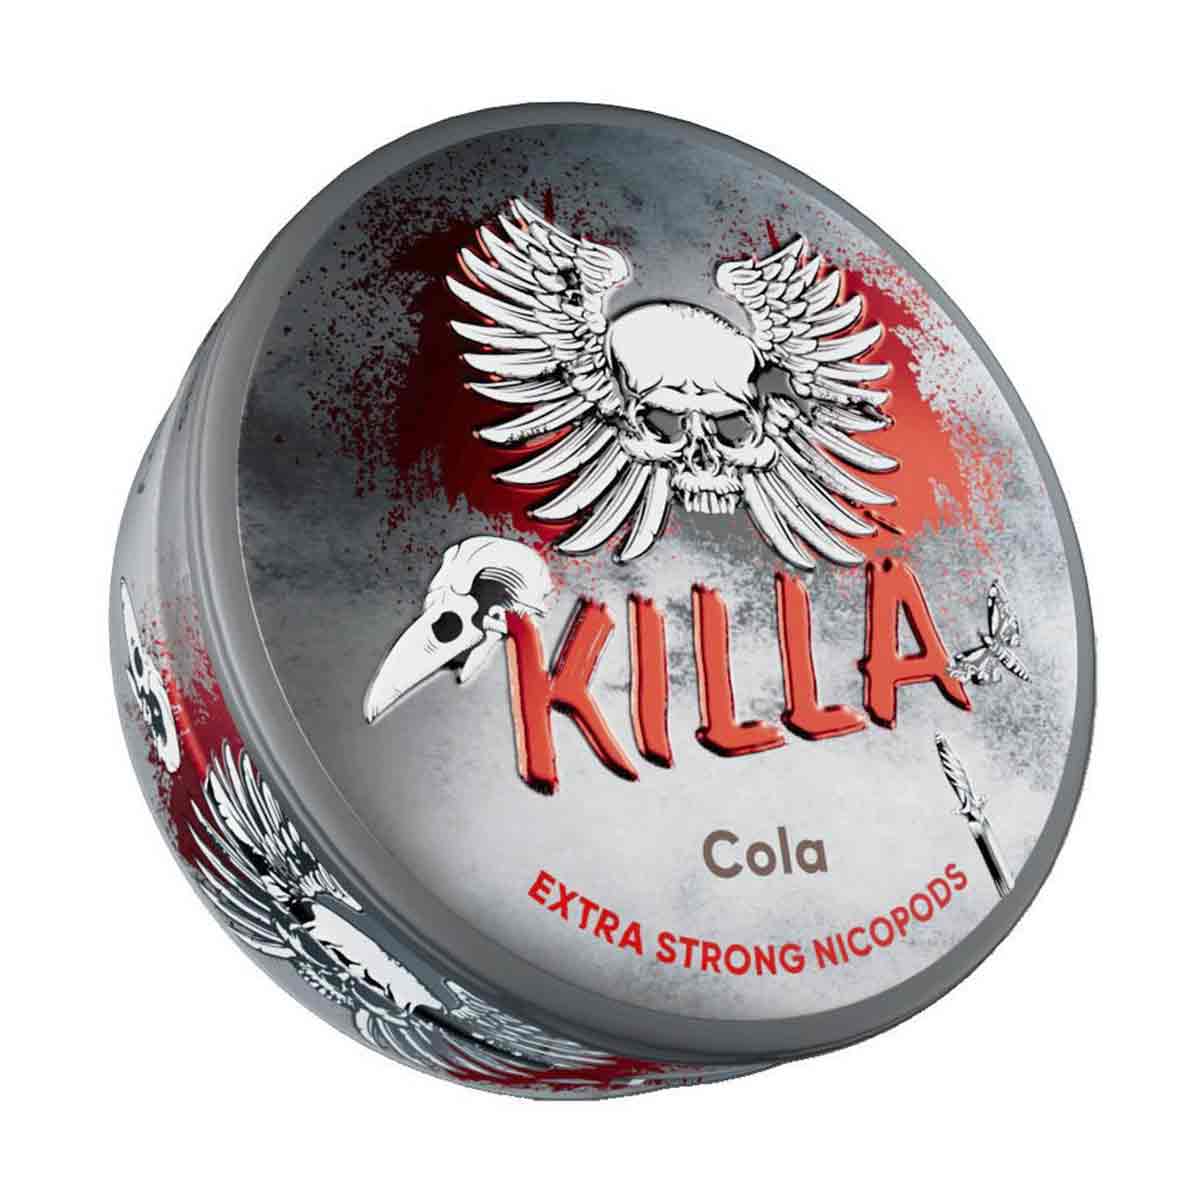 Cola Killa Nicotine Snus Pouches